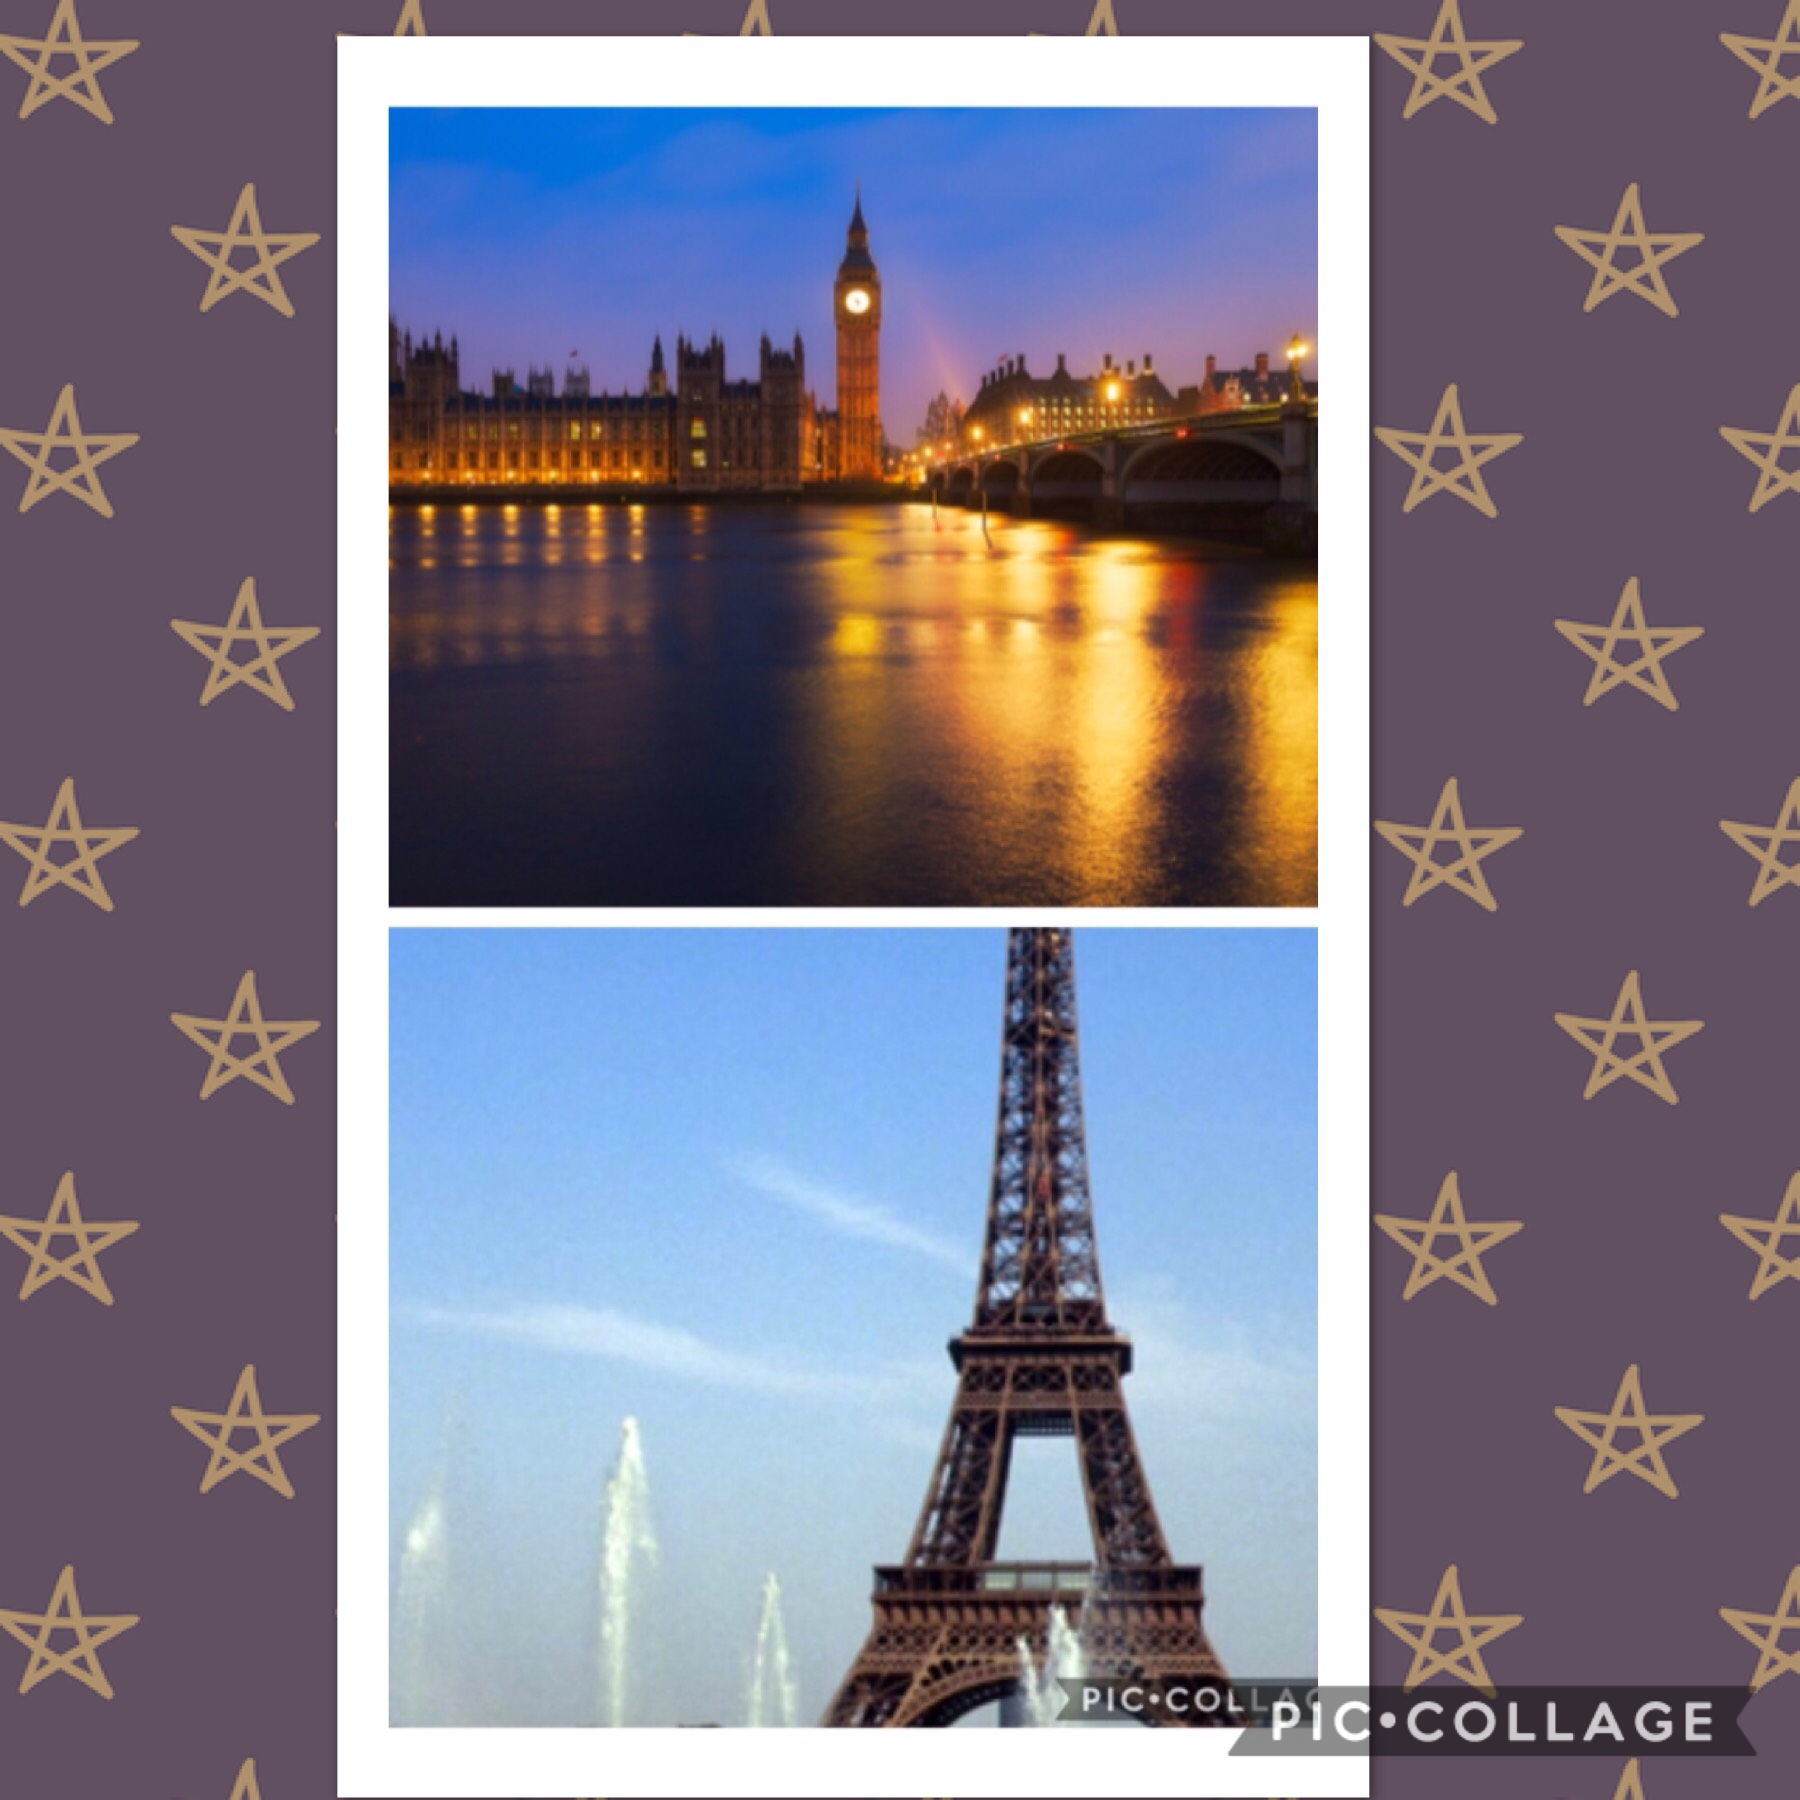 Paris or London?